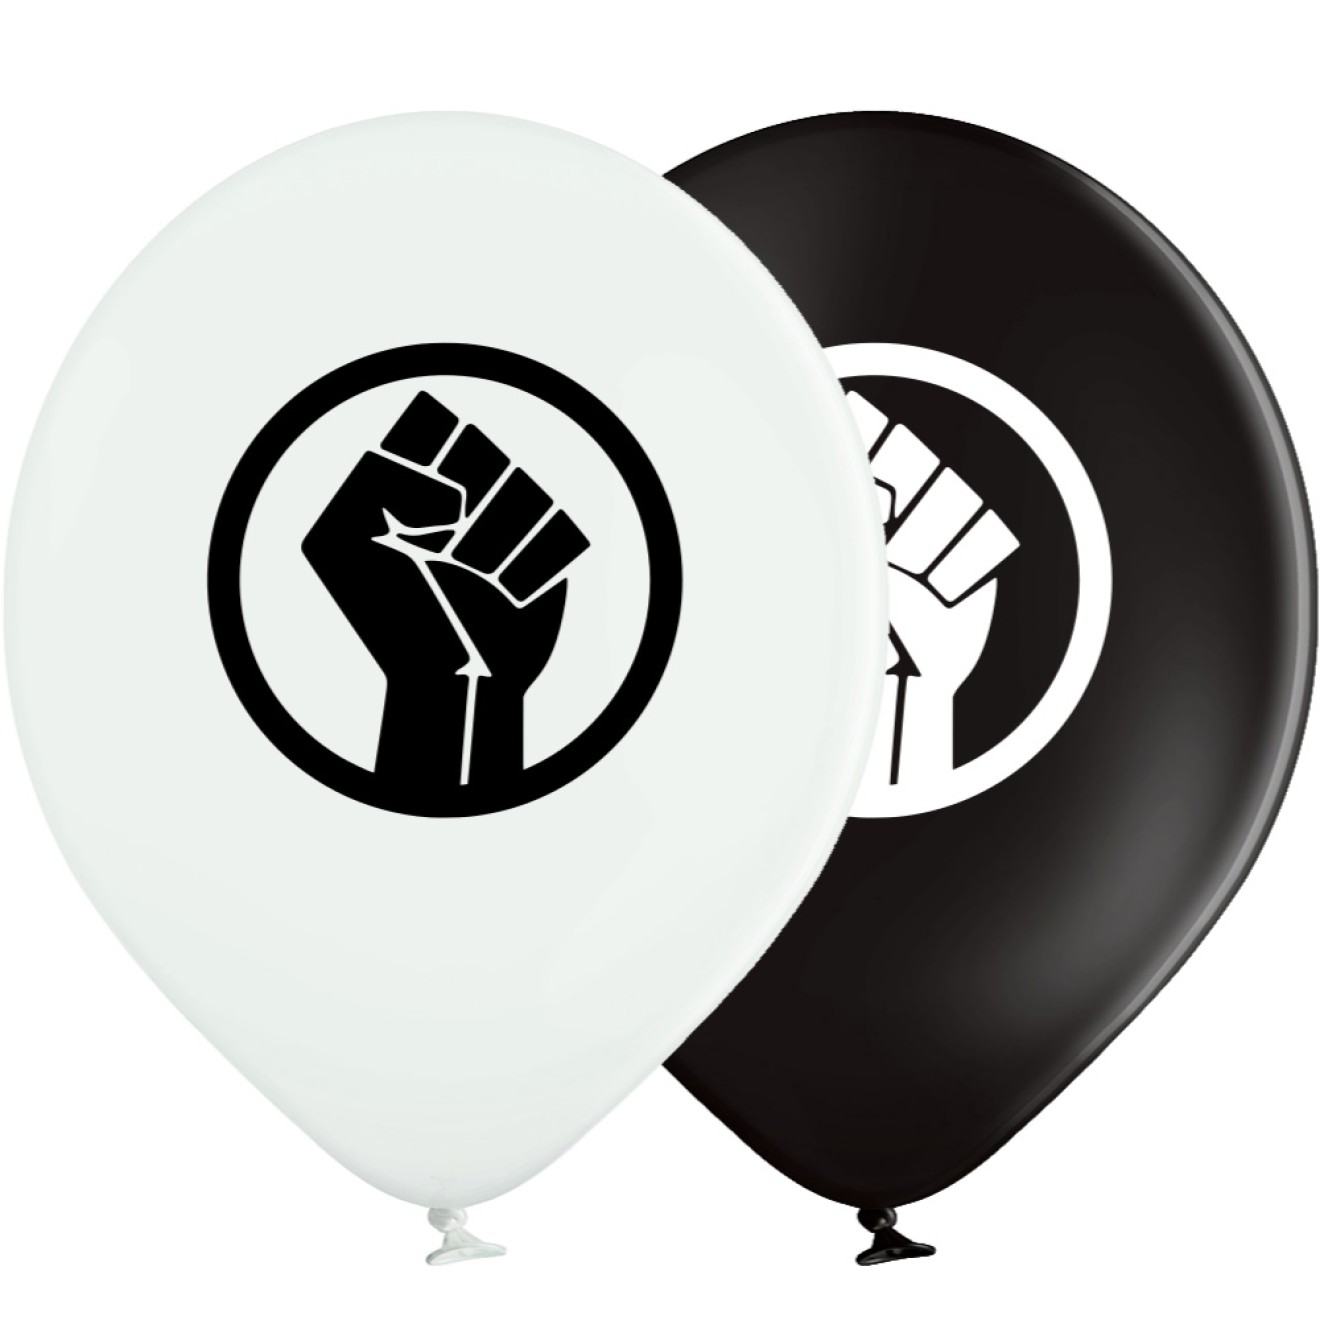 Luftballons Black Lives Matter - Freie Farbwahl